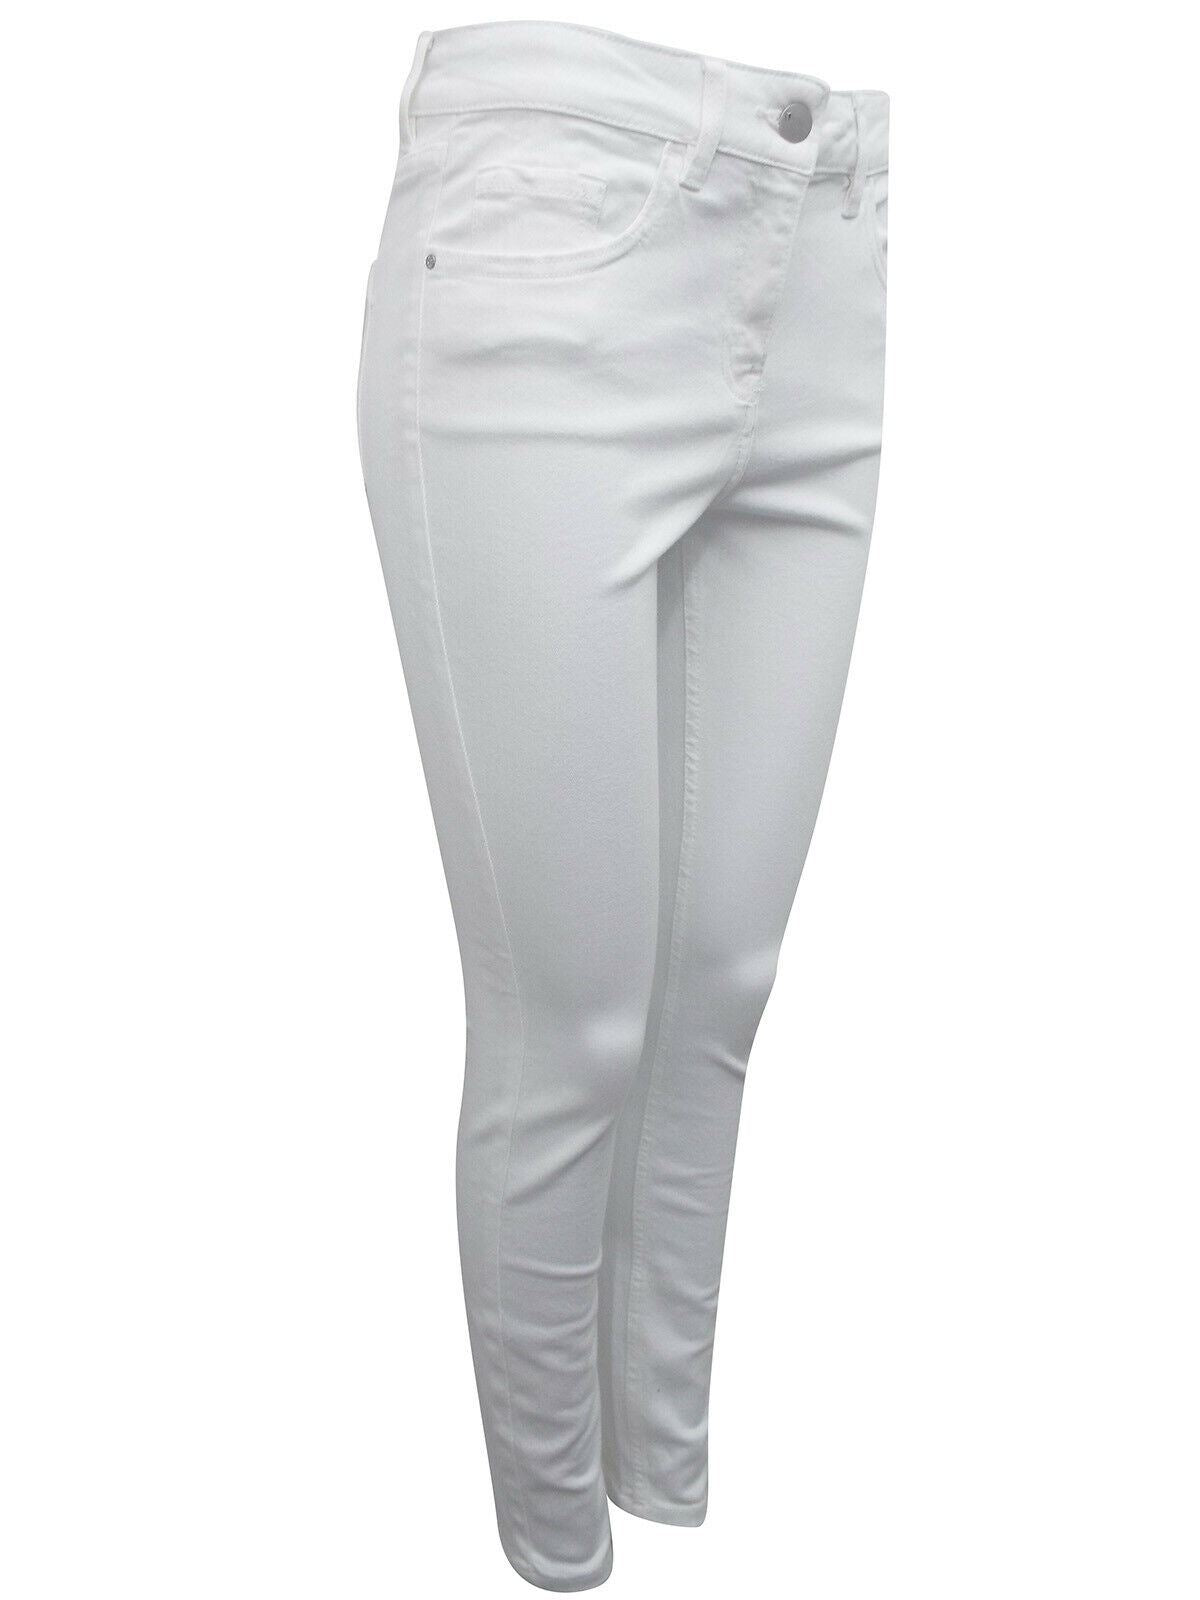 Next White Mid Rise Cotton Rich Skinny Jeans L31  Sizes: 8, 10, 12, 18, 20, 22